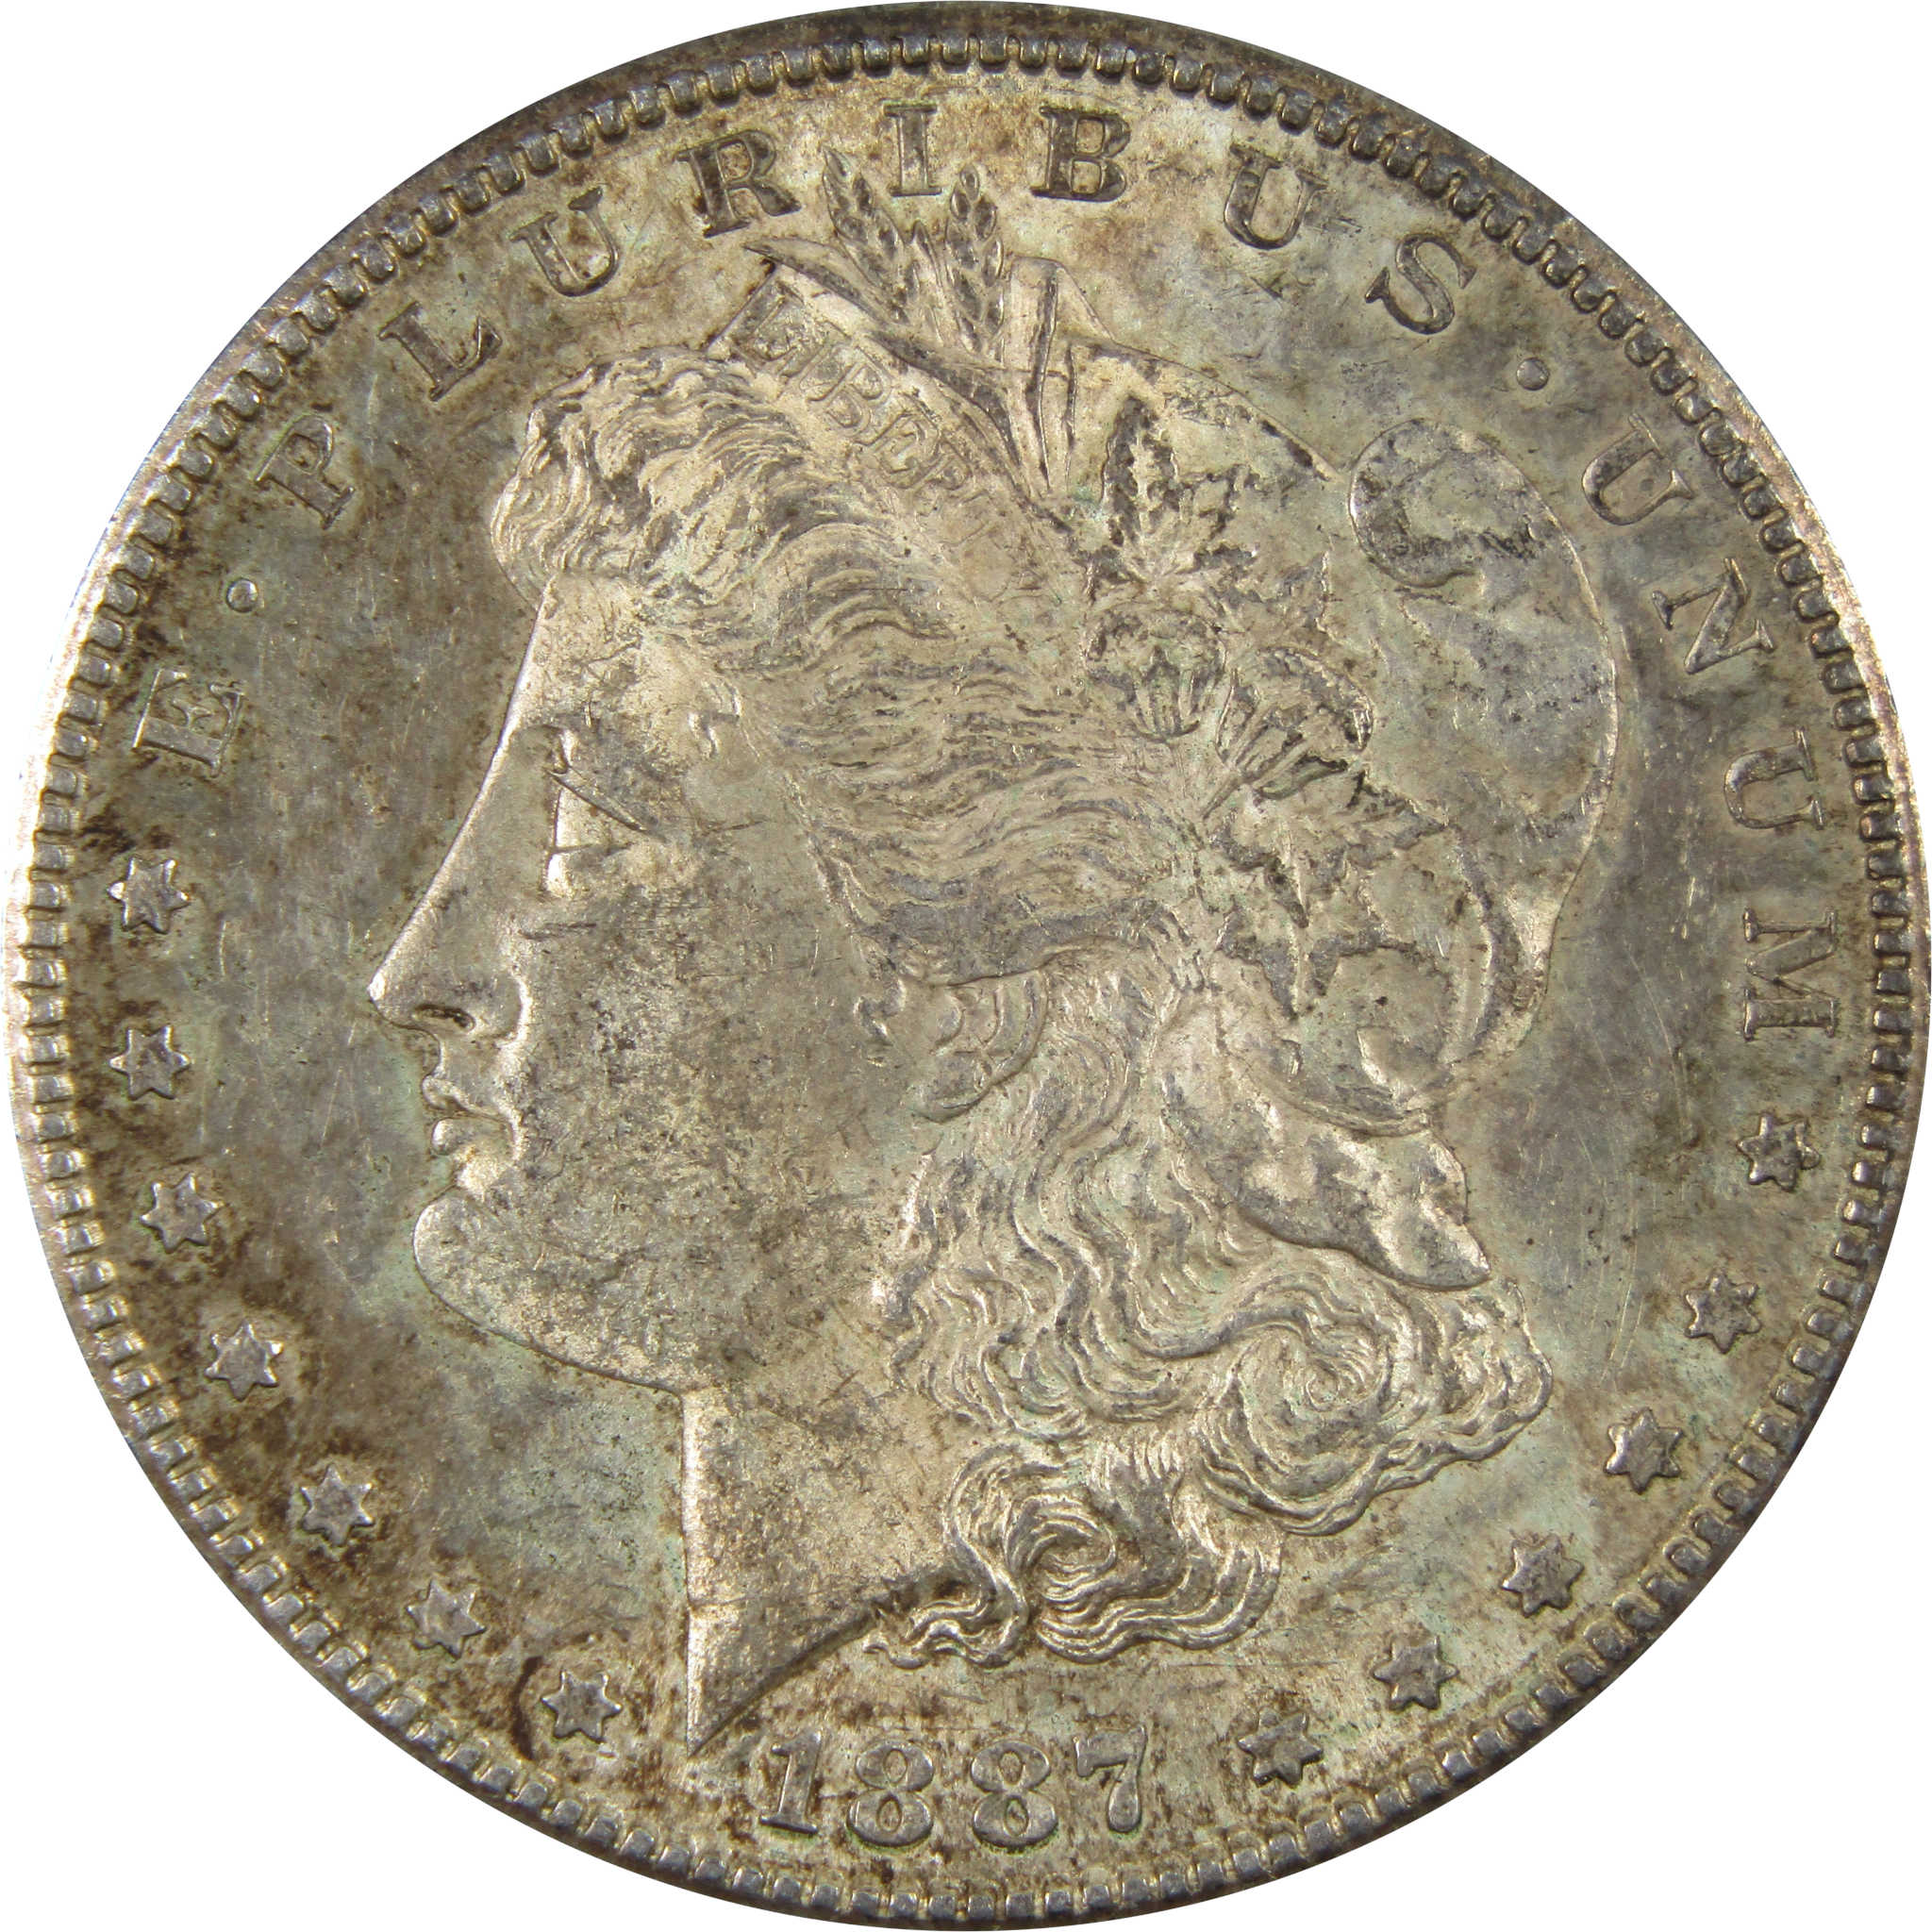 1887 S Morgan Dollar Borderline Uncirculated 90% Silver $1 SKU:I5041 - Morgan coin - Morgan silver dollar - Morgan silver dollar for sale - Profile Coins &amp; Collectibles